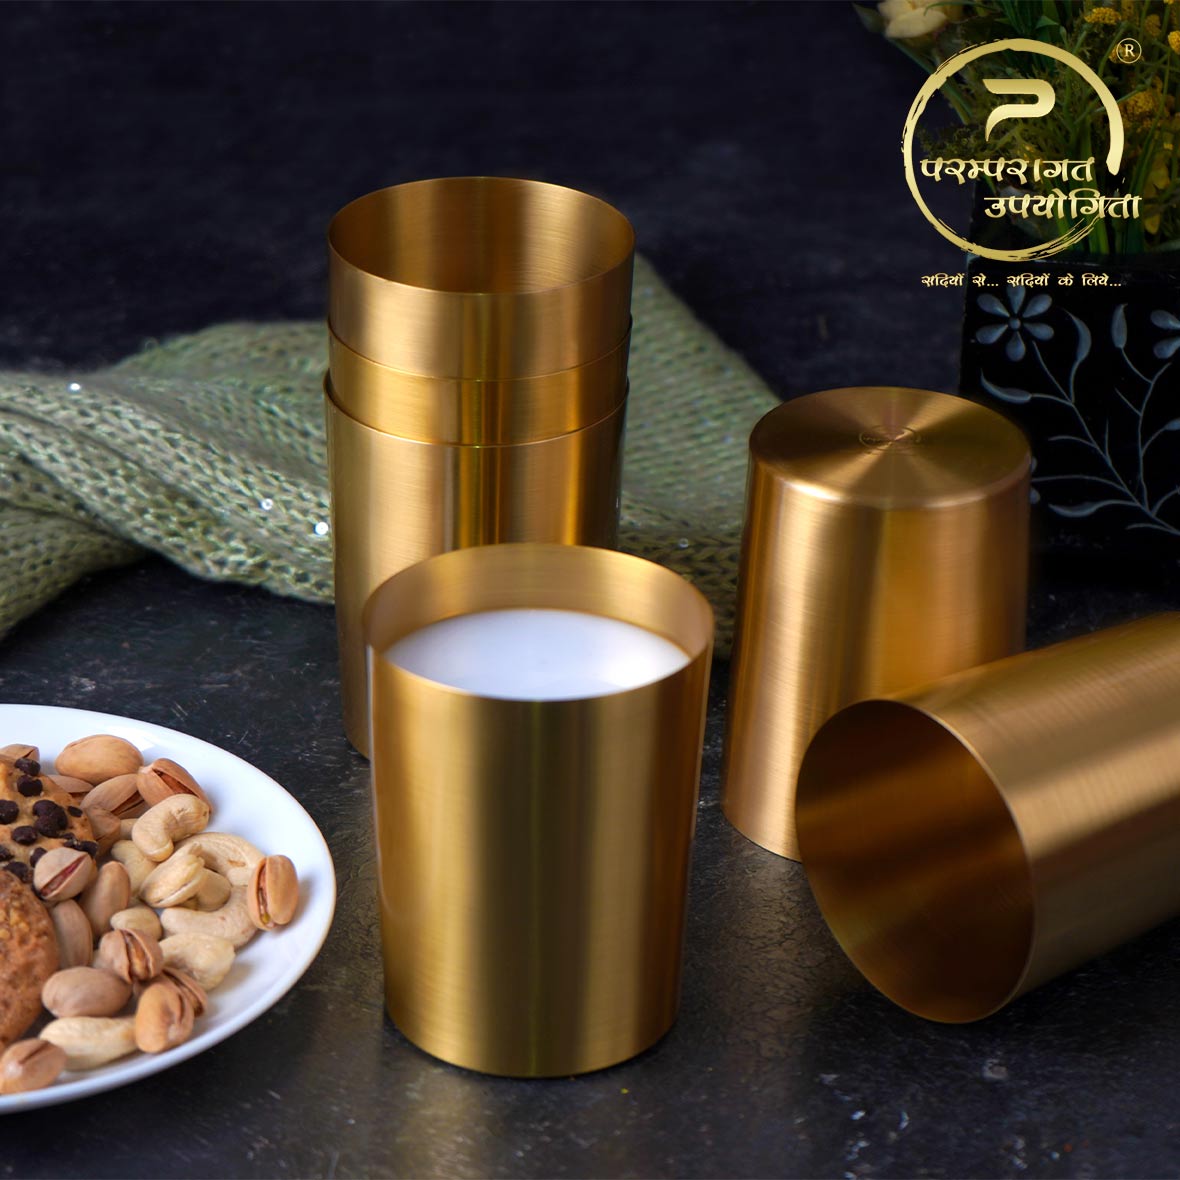 Paramparagat Upyogita Swarna Devyani Brass Glass Gift Set